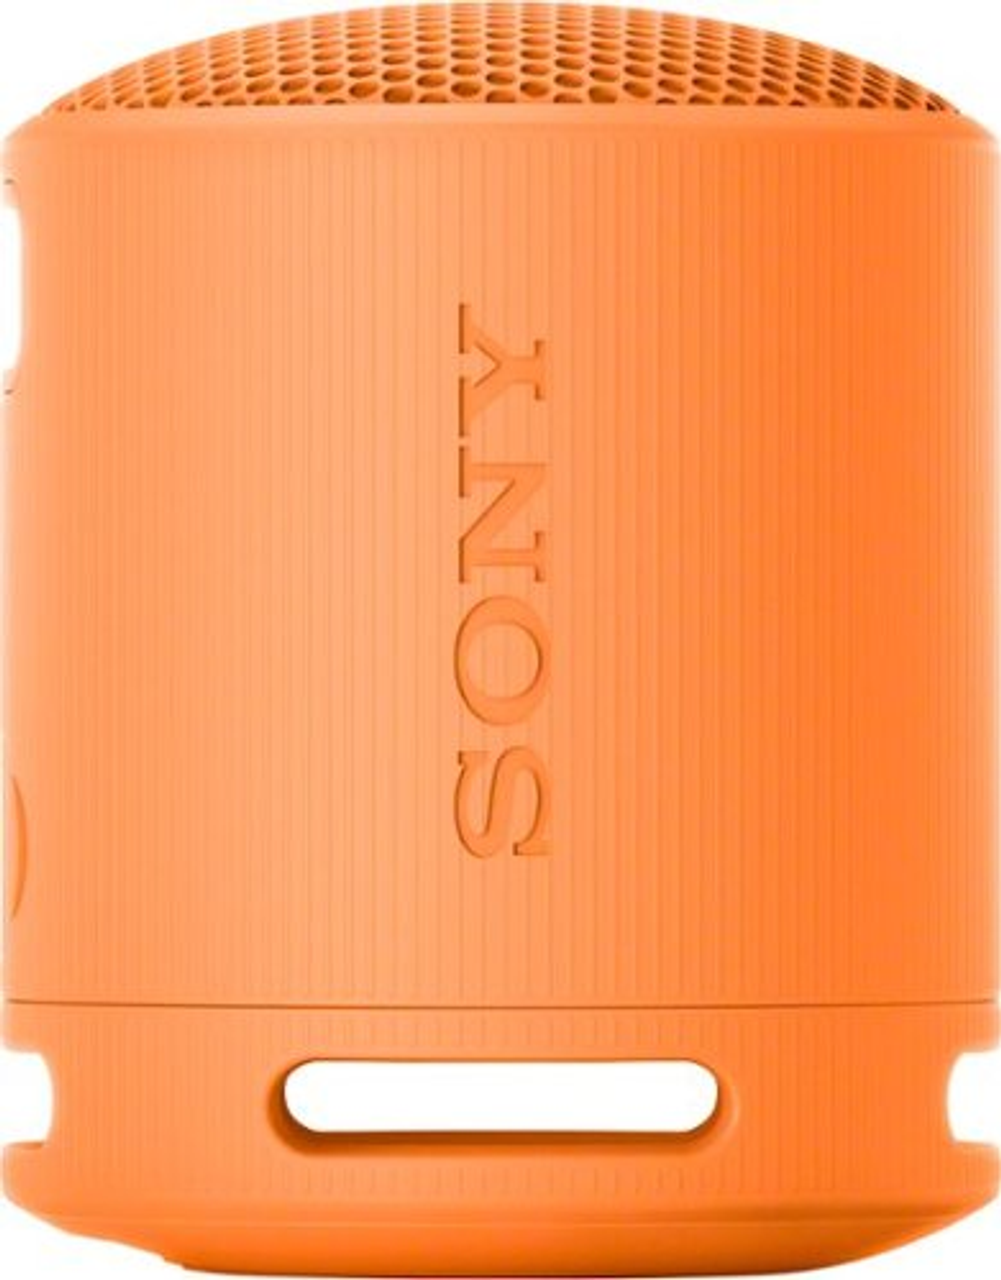 Sony - XB100/D Compact Bluetooth Speaker - Orange